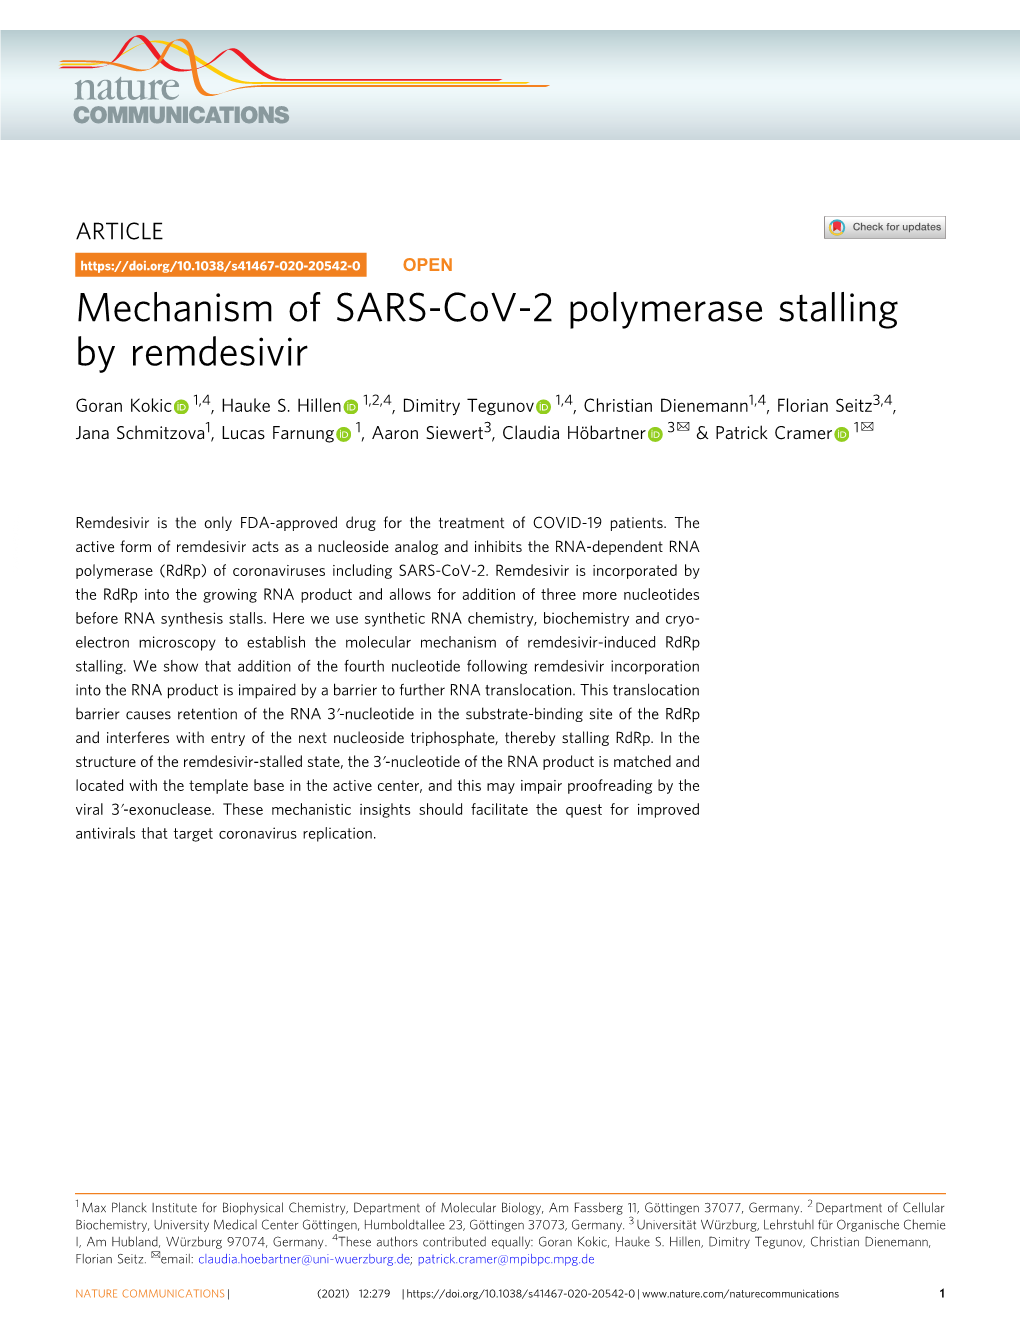 Mechanism of SARS-Cov-2 Polymerase Stalling by Remdesivir